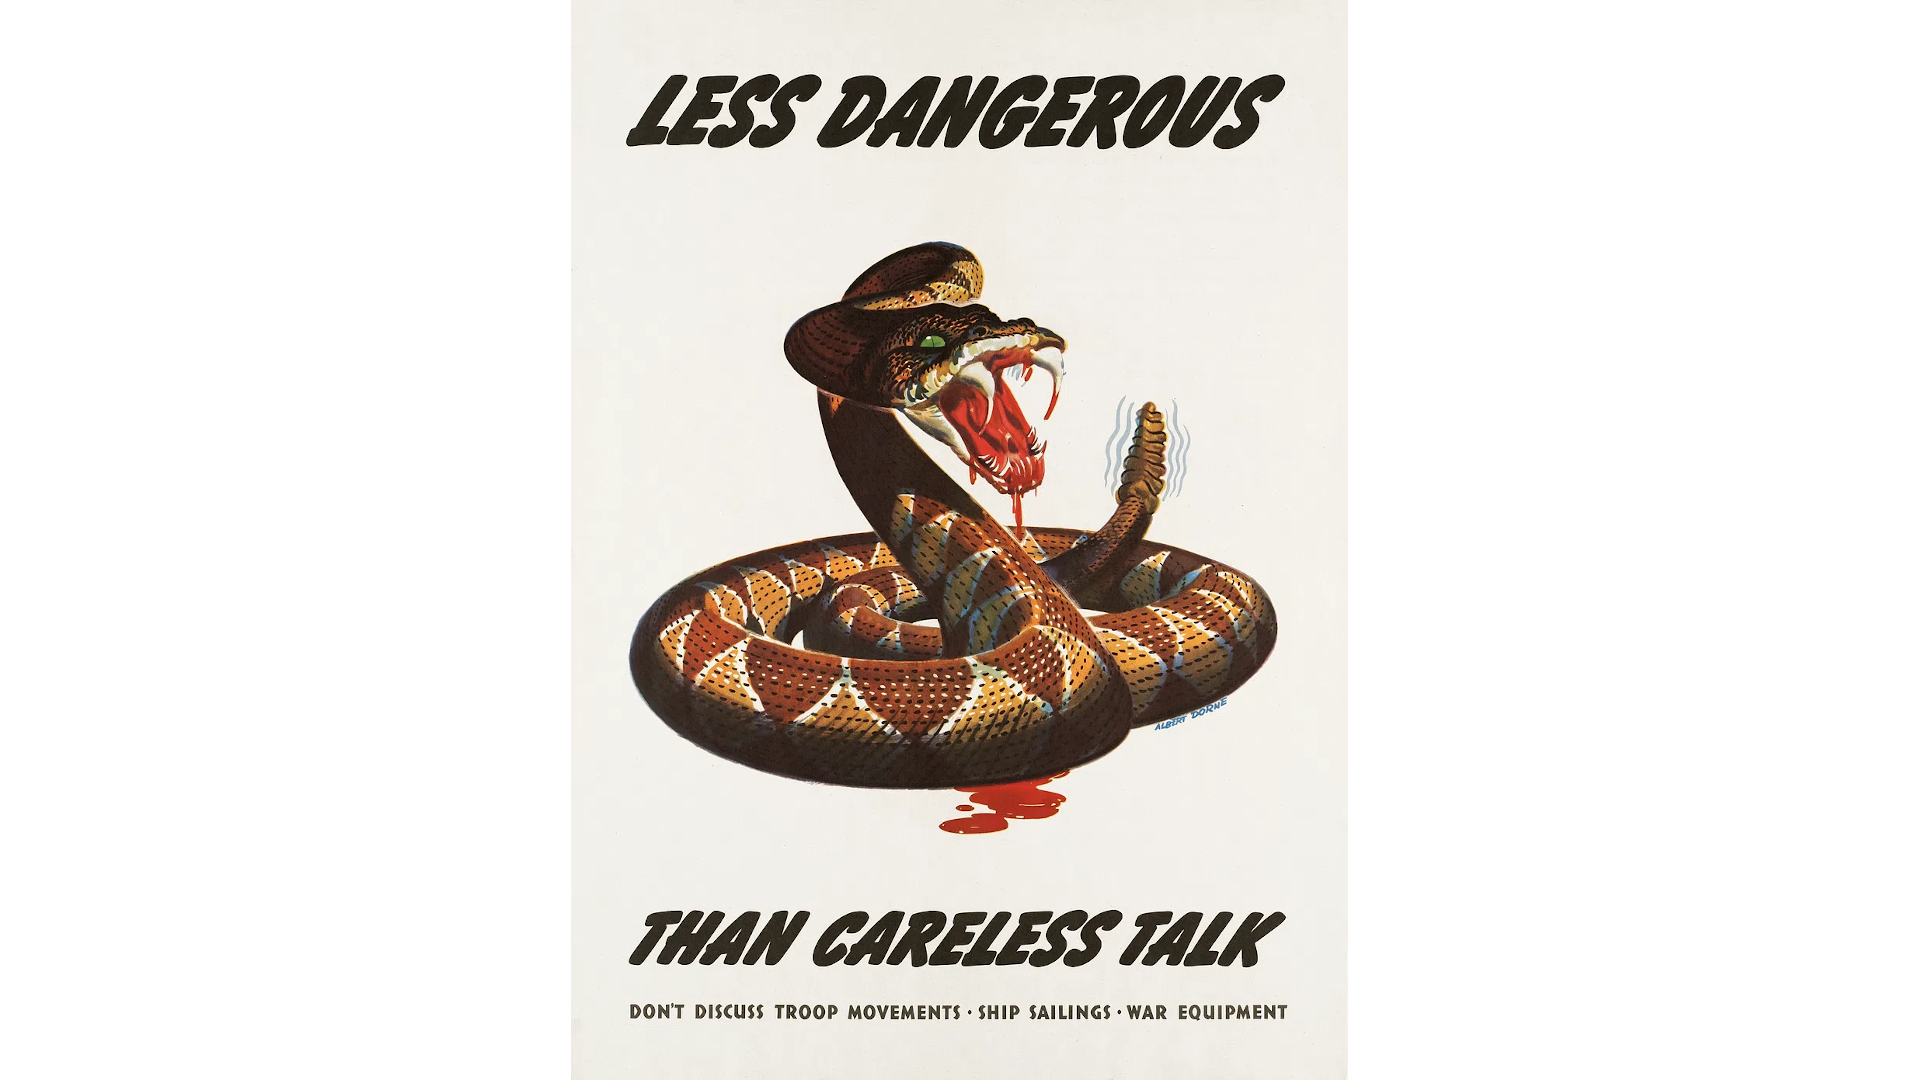 Less Dangerous Than Careless Talk